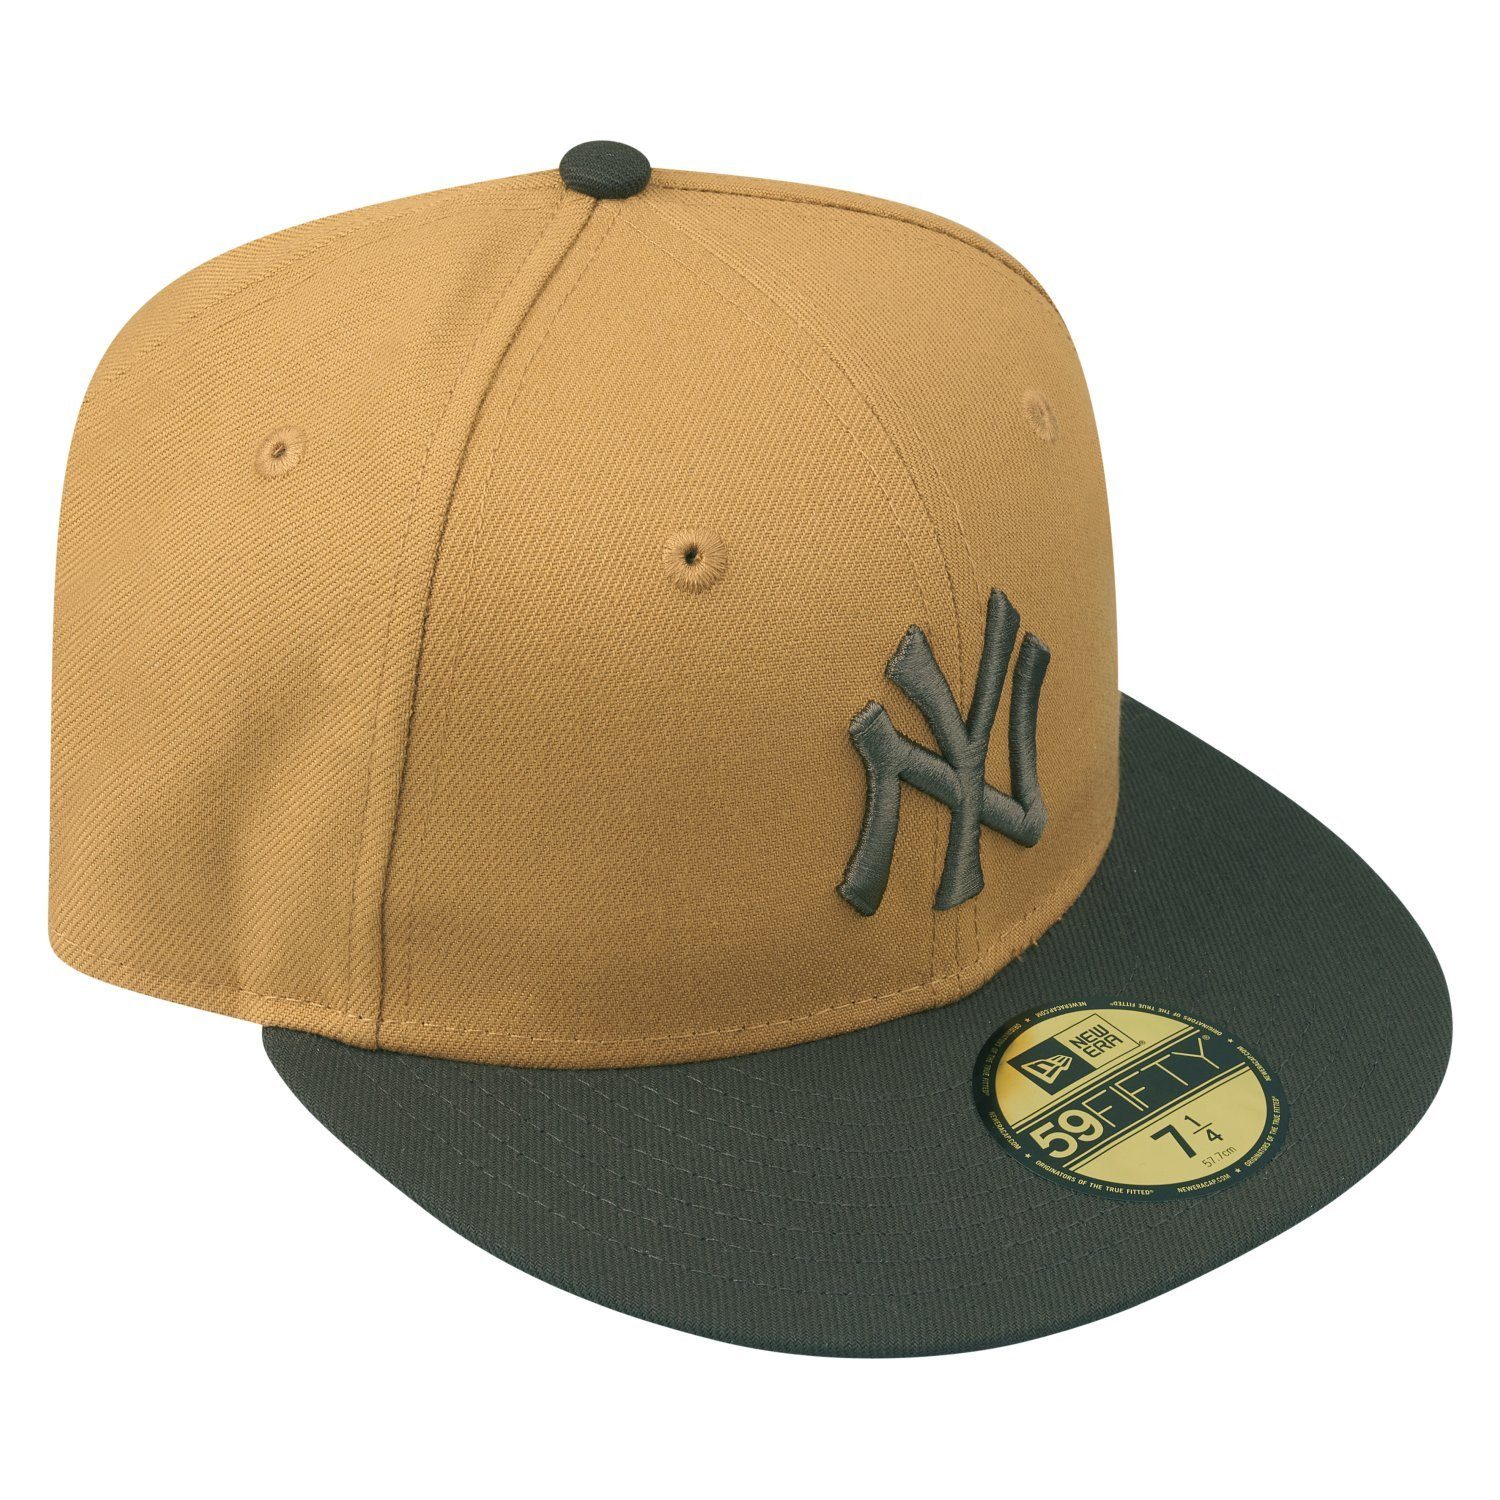 New New York Fitted Cap Era 59Fifty Yankees panama